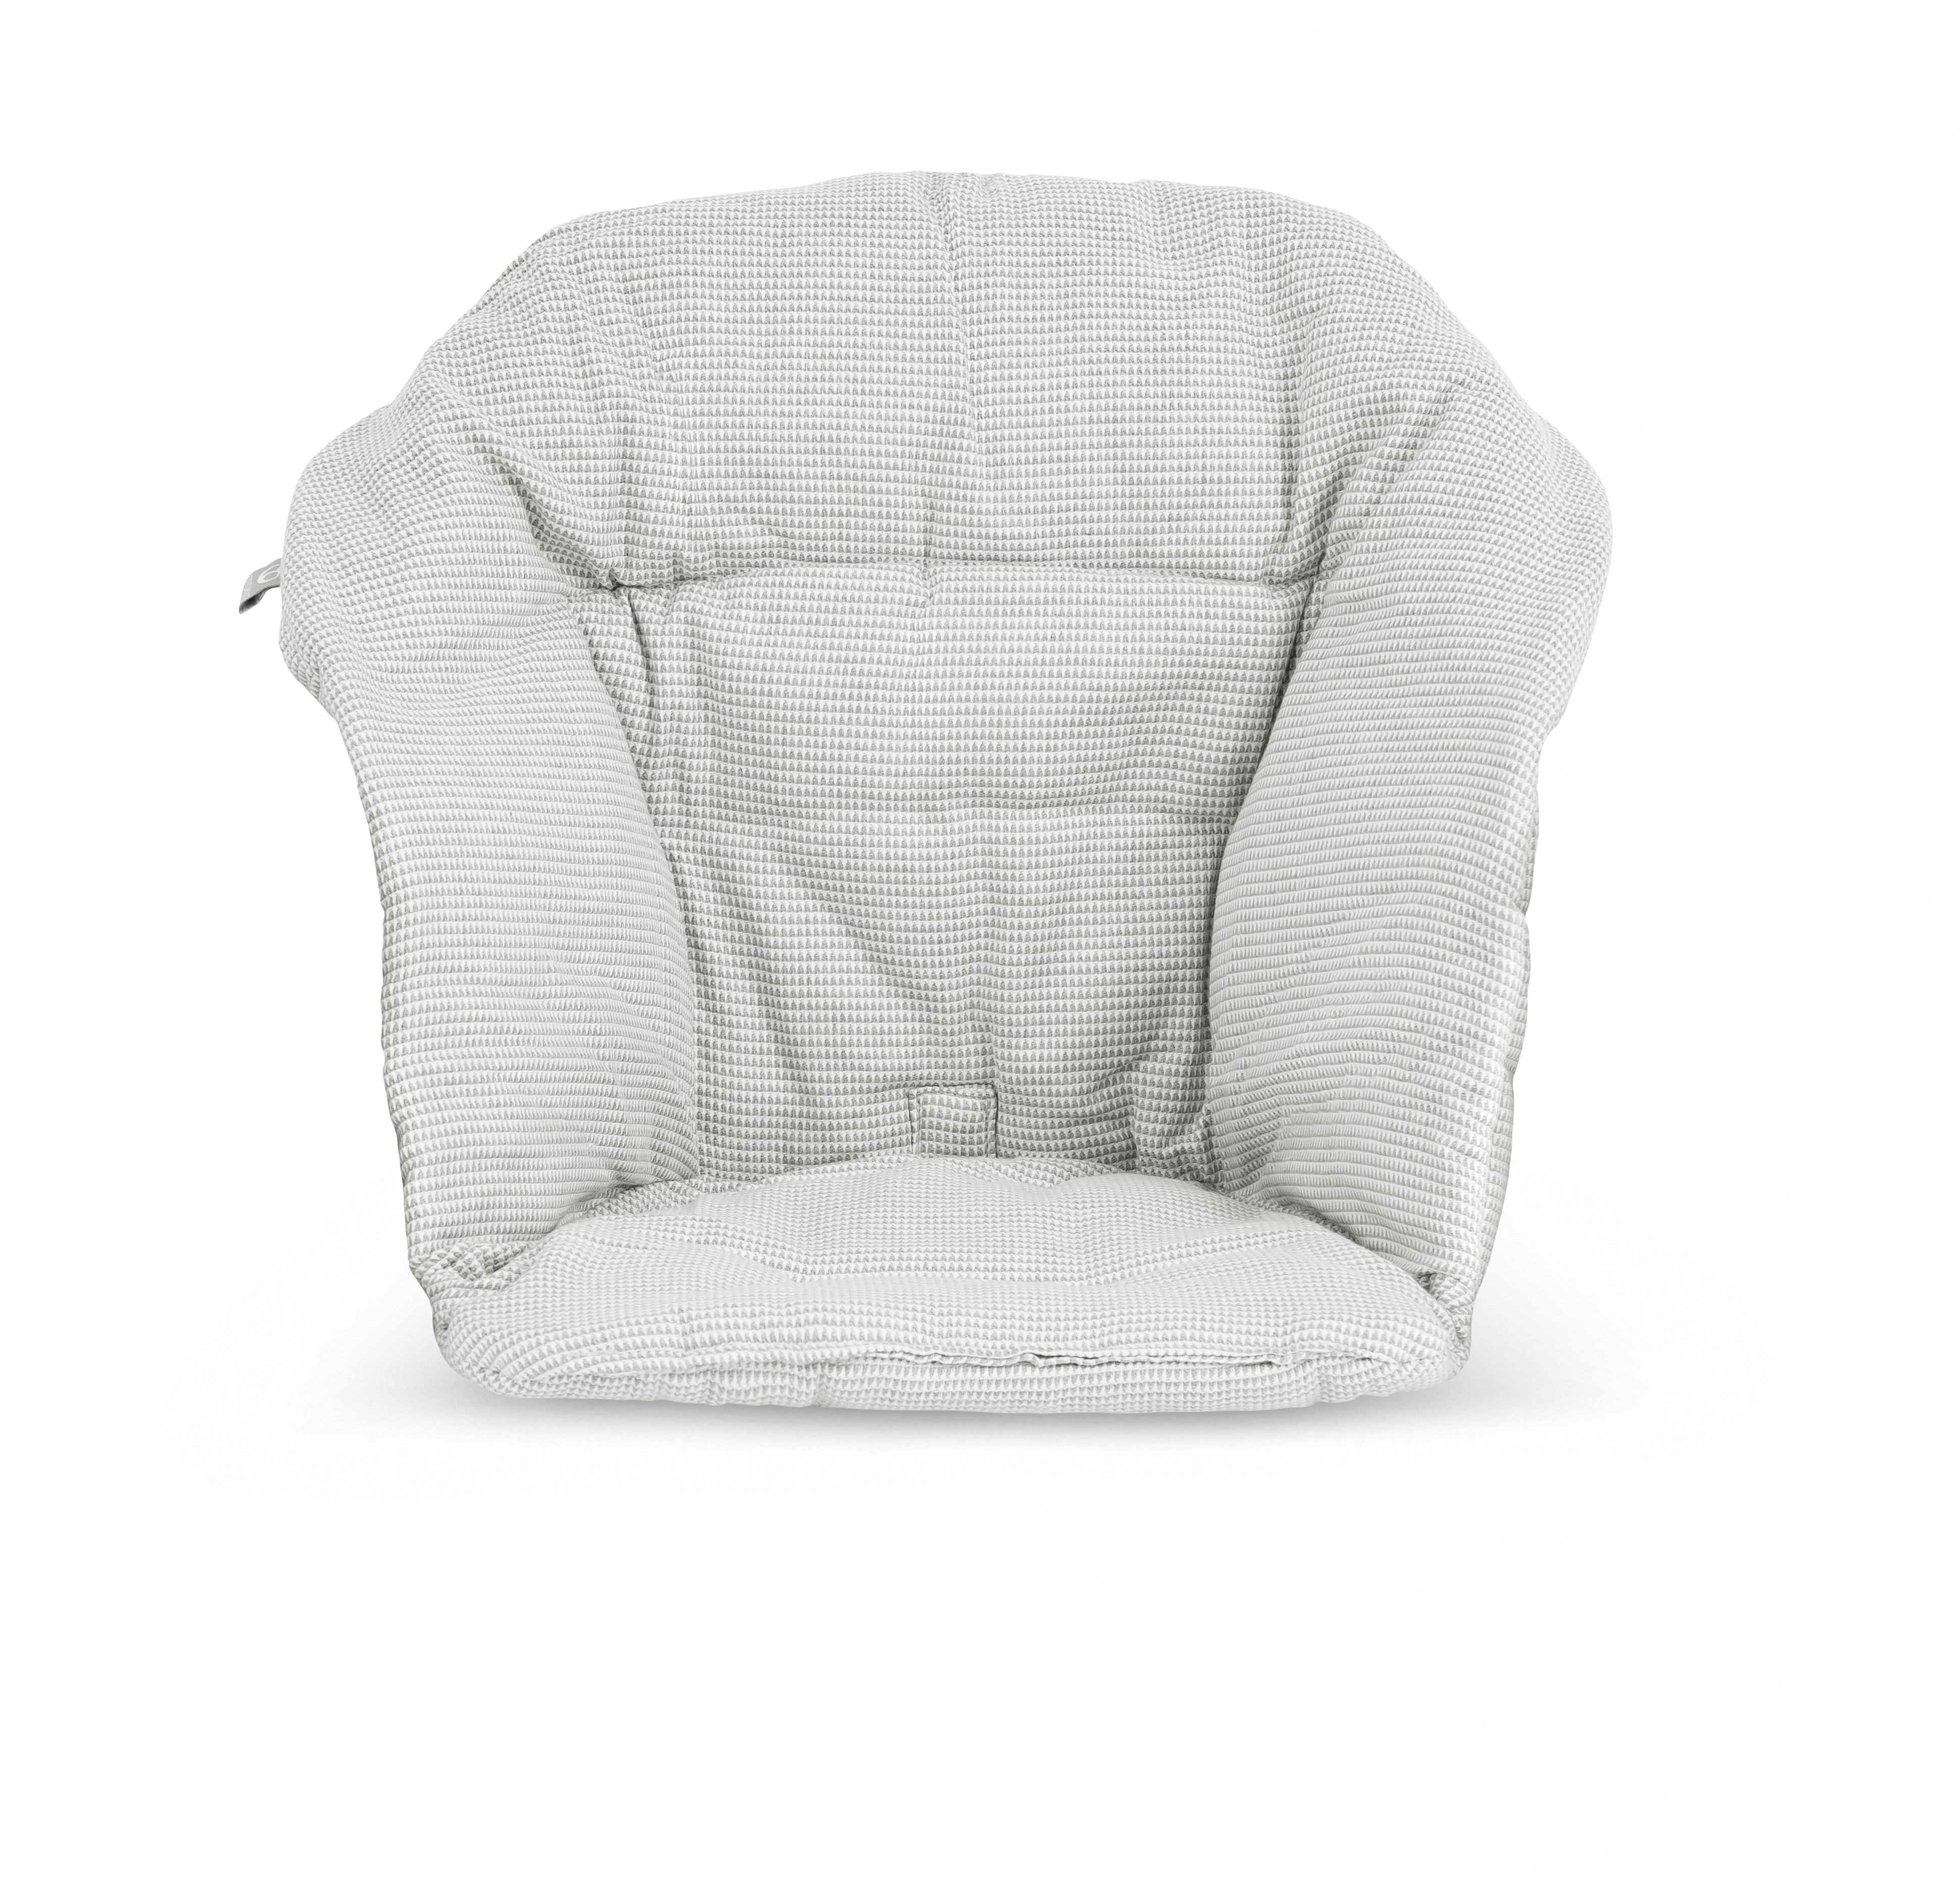 Stokke® Clikk™ Cushion